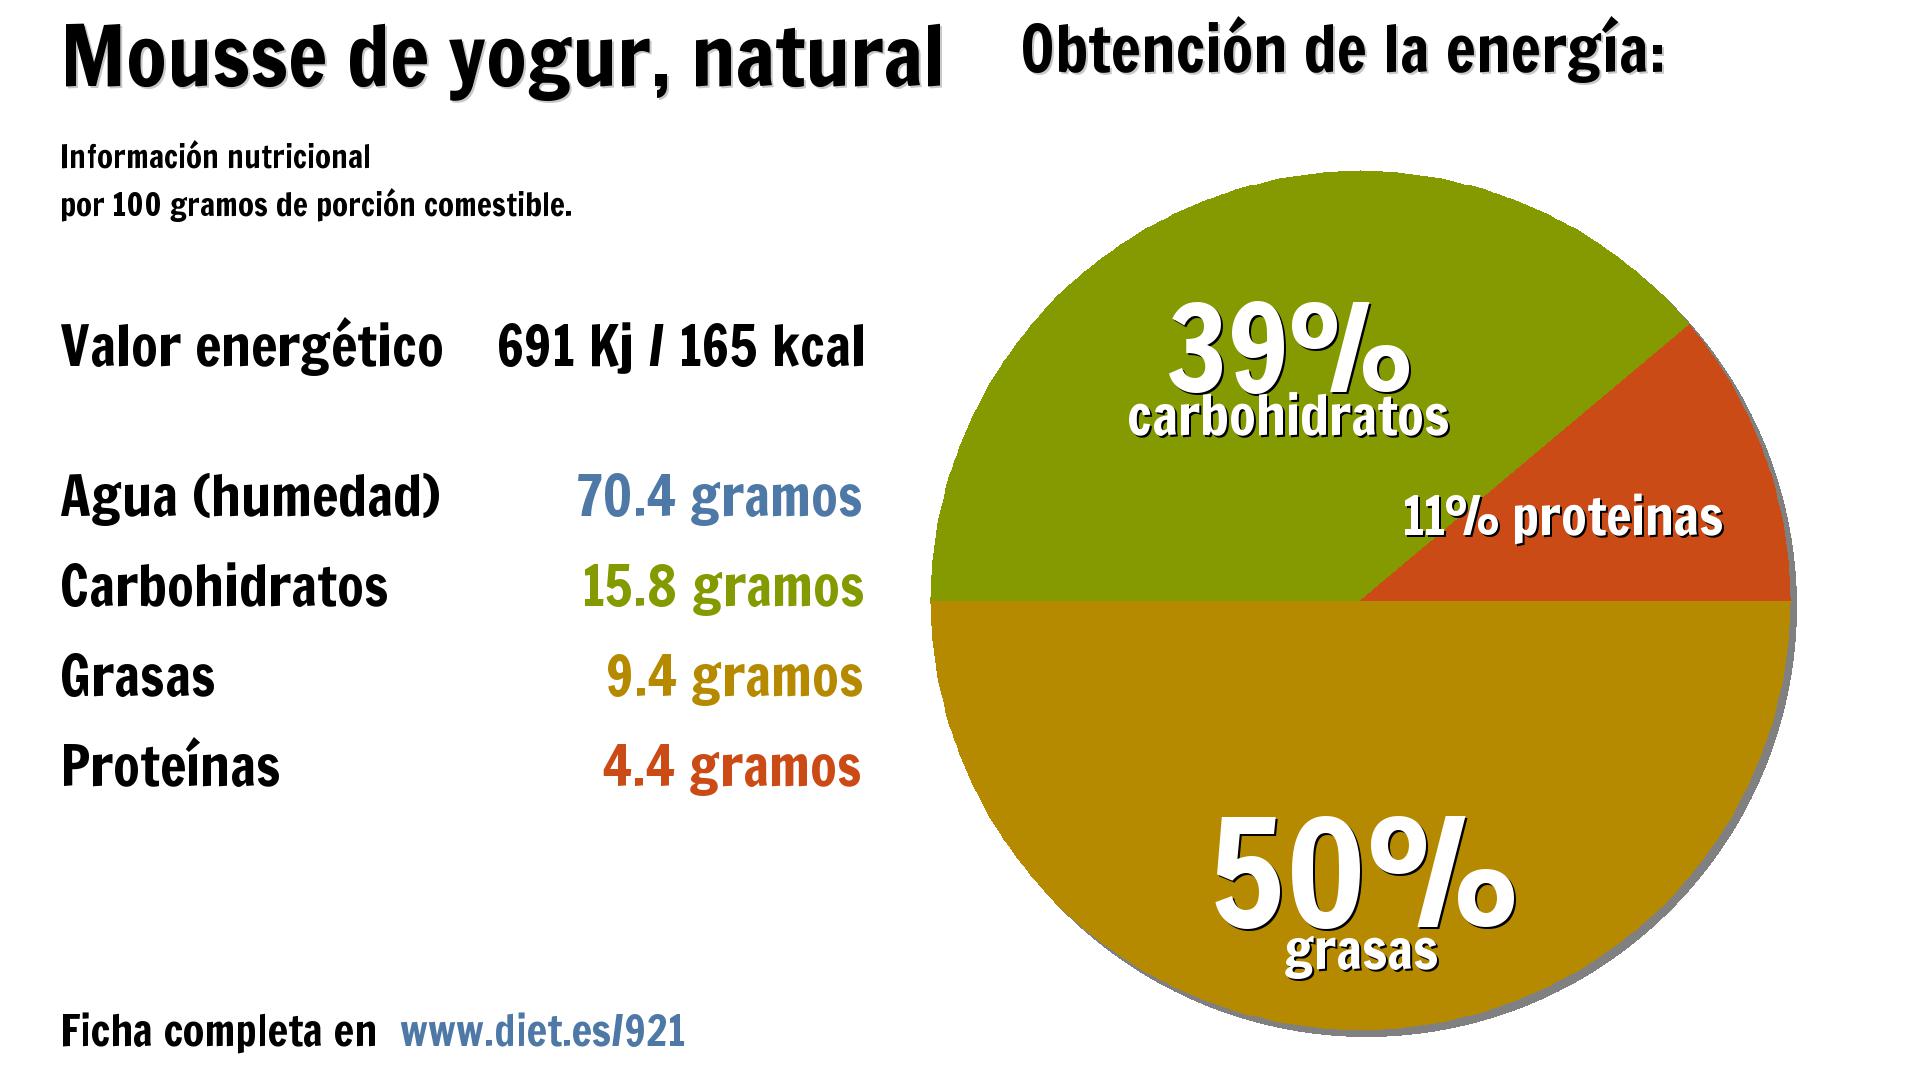 Mousse de yogur, natural: energía 691 Kj, agua 70 g., carbohidratos 16 g., grasas 9 g. y proteínas 4 g.